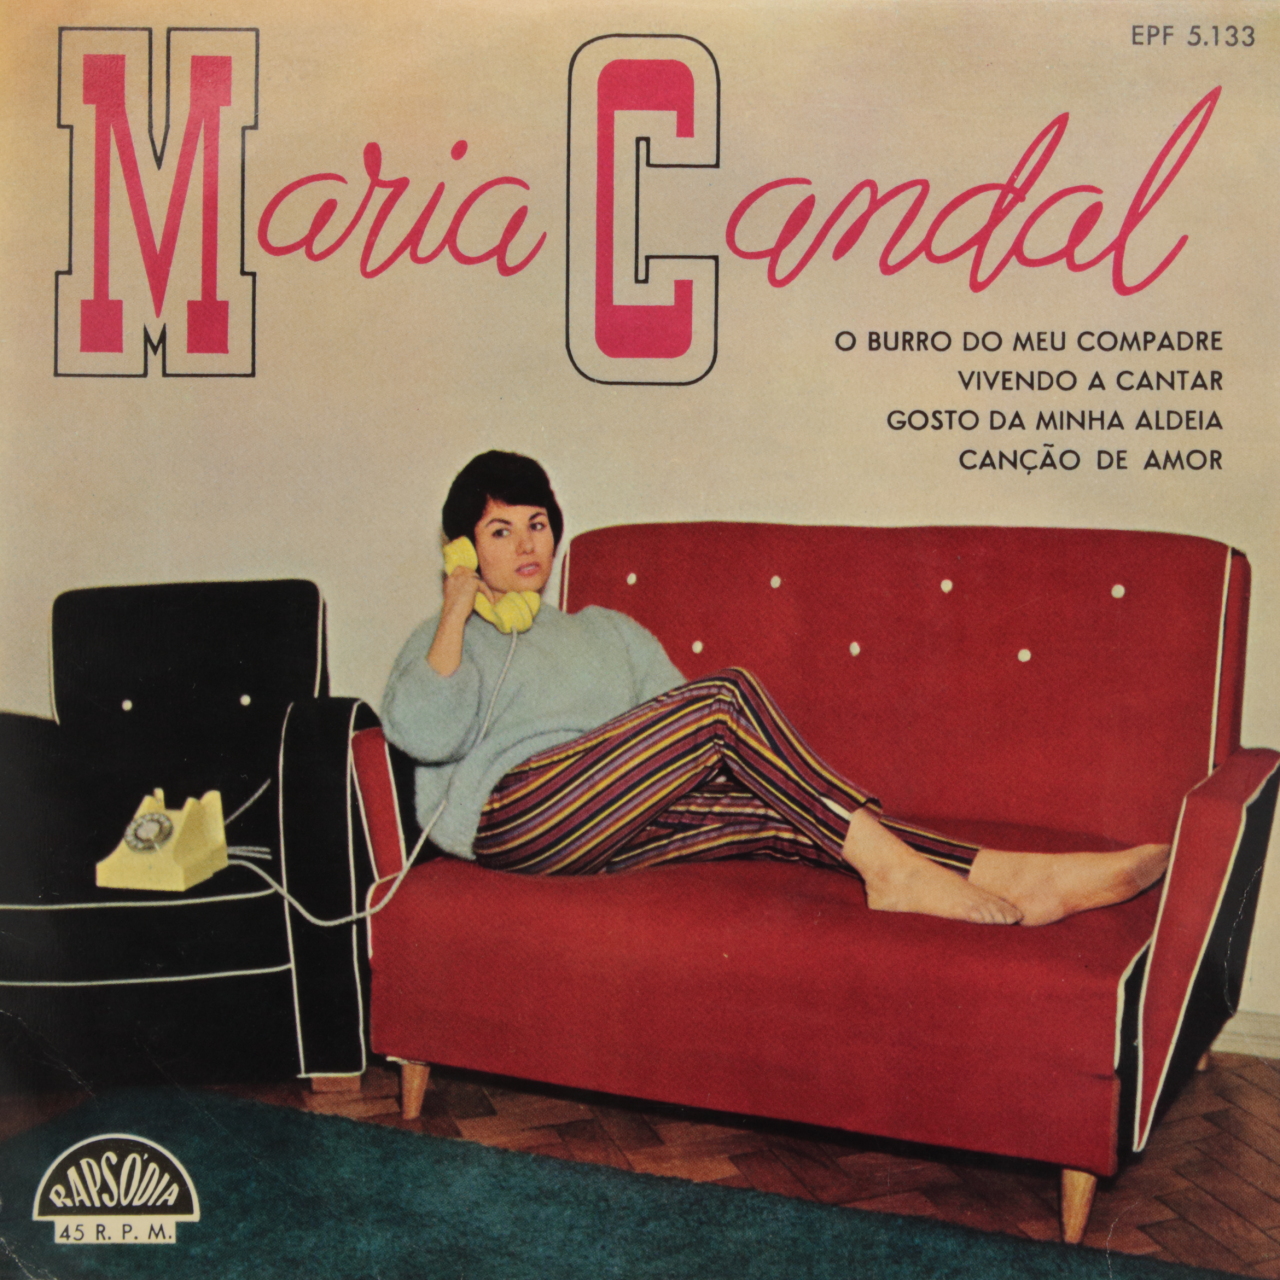 Maria Candal